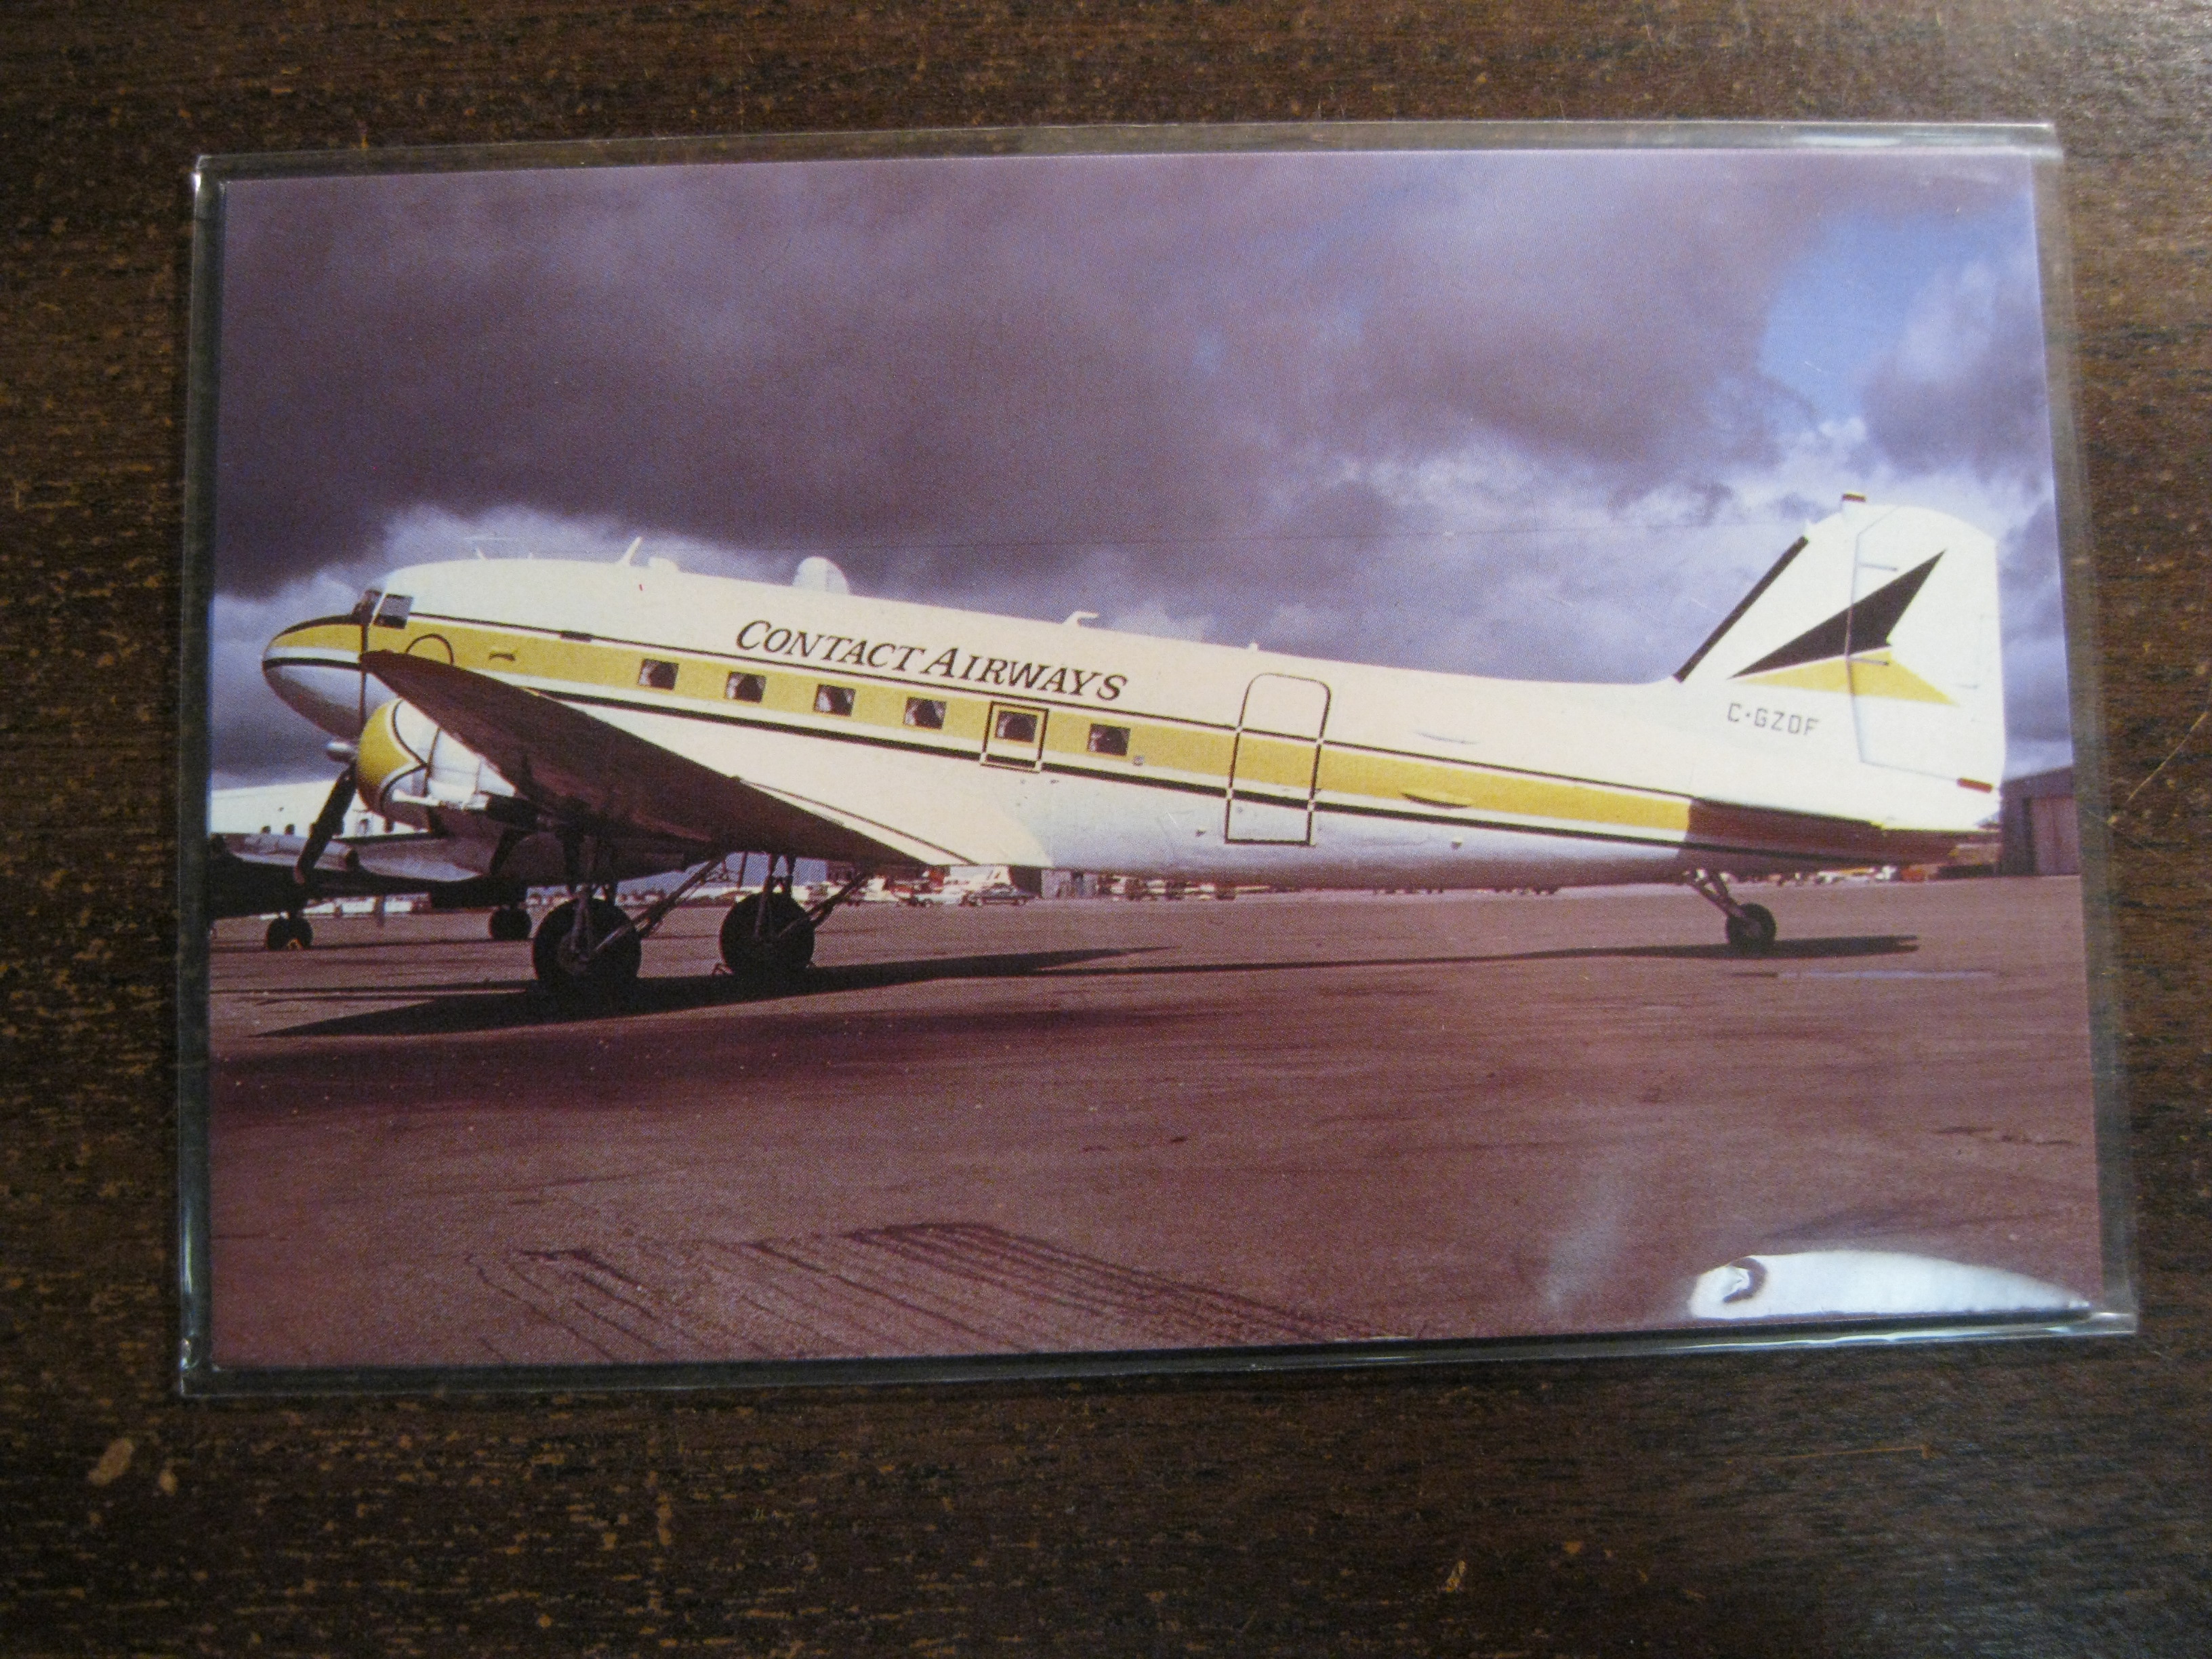 Contact Airways Douglas DC-3 post card